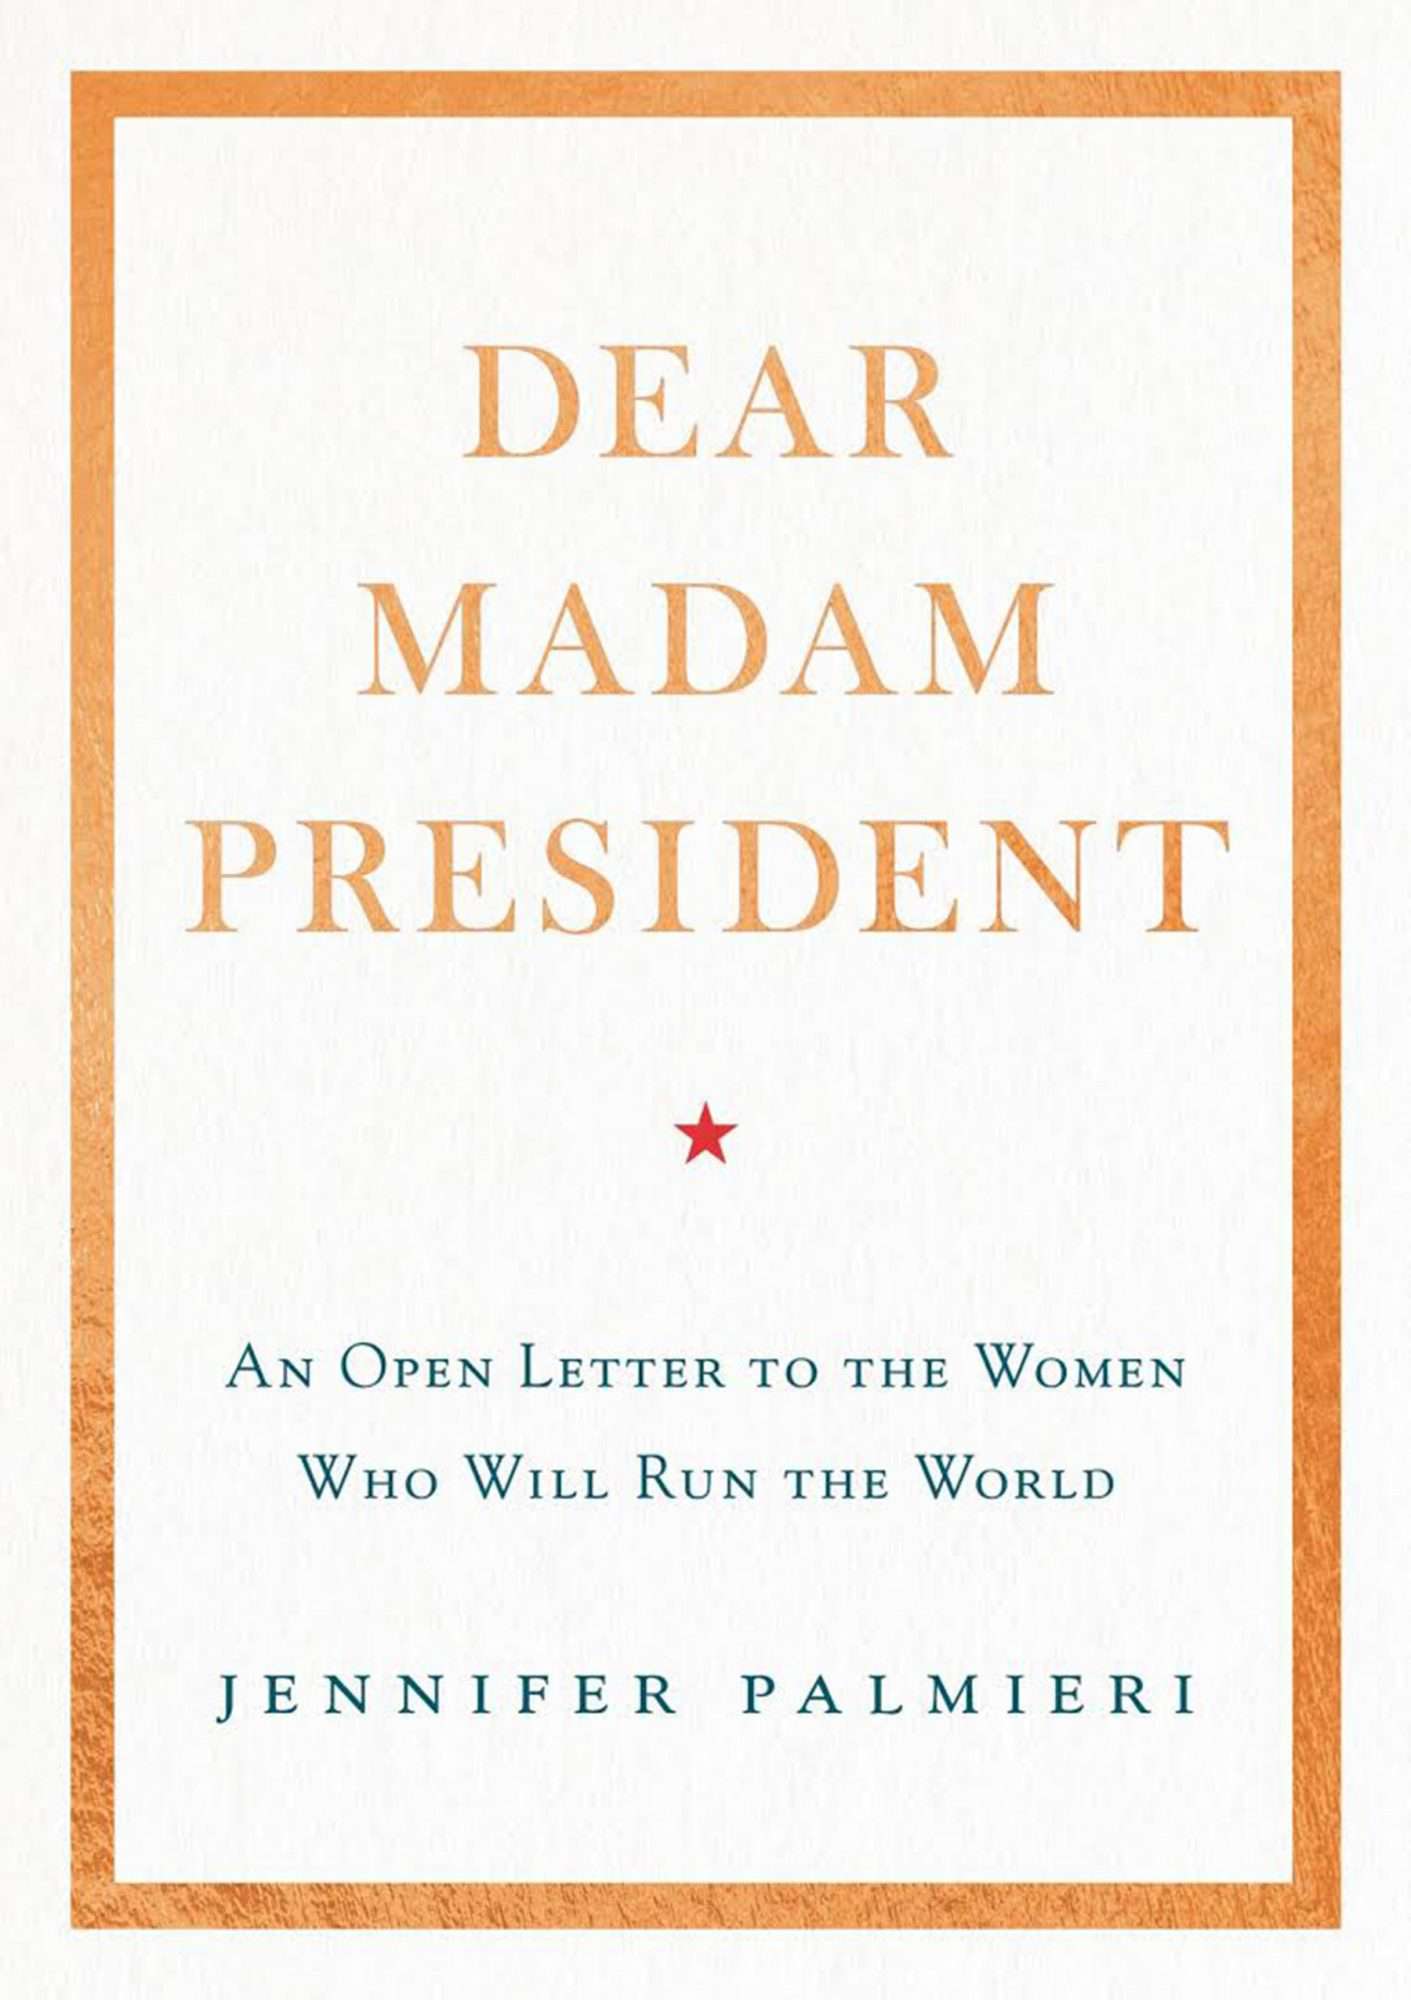 Dear Madam President: An Open Letter to the Women Who Will Run the World, by Jennifer Palmieri